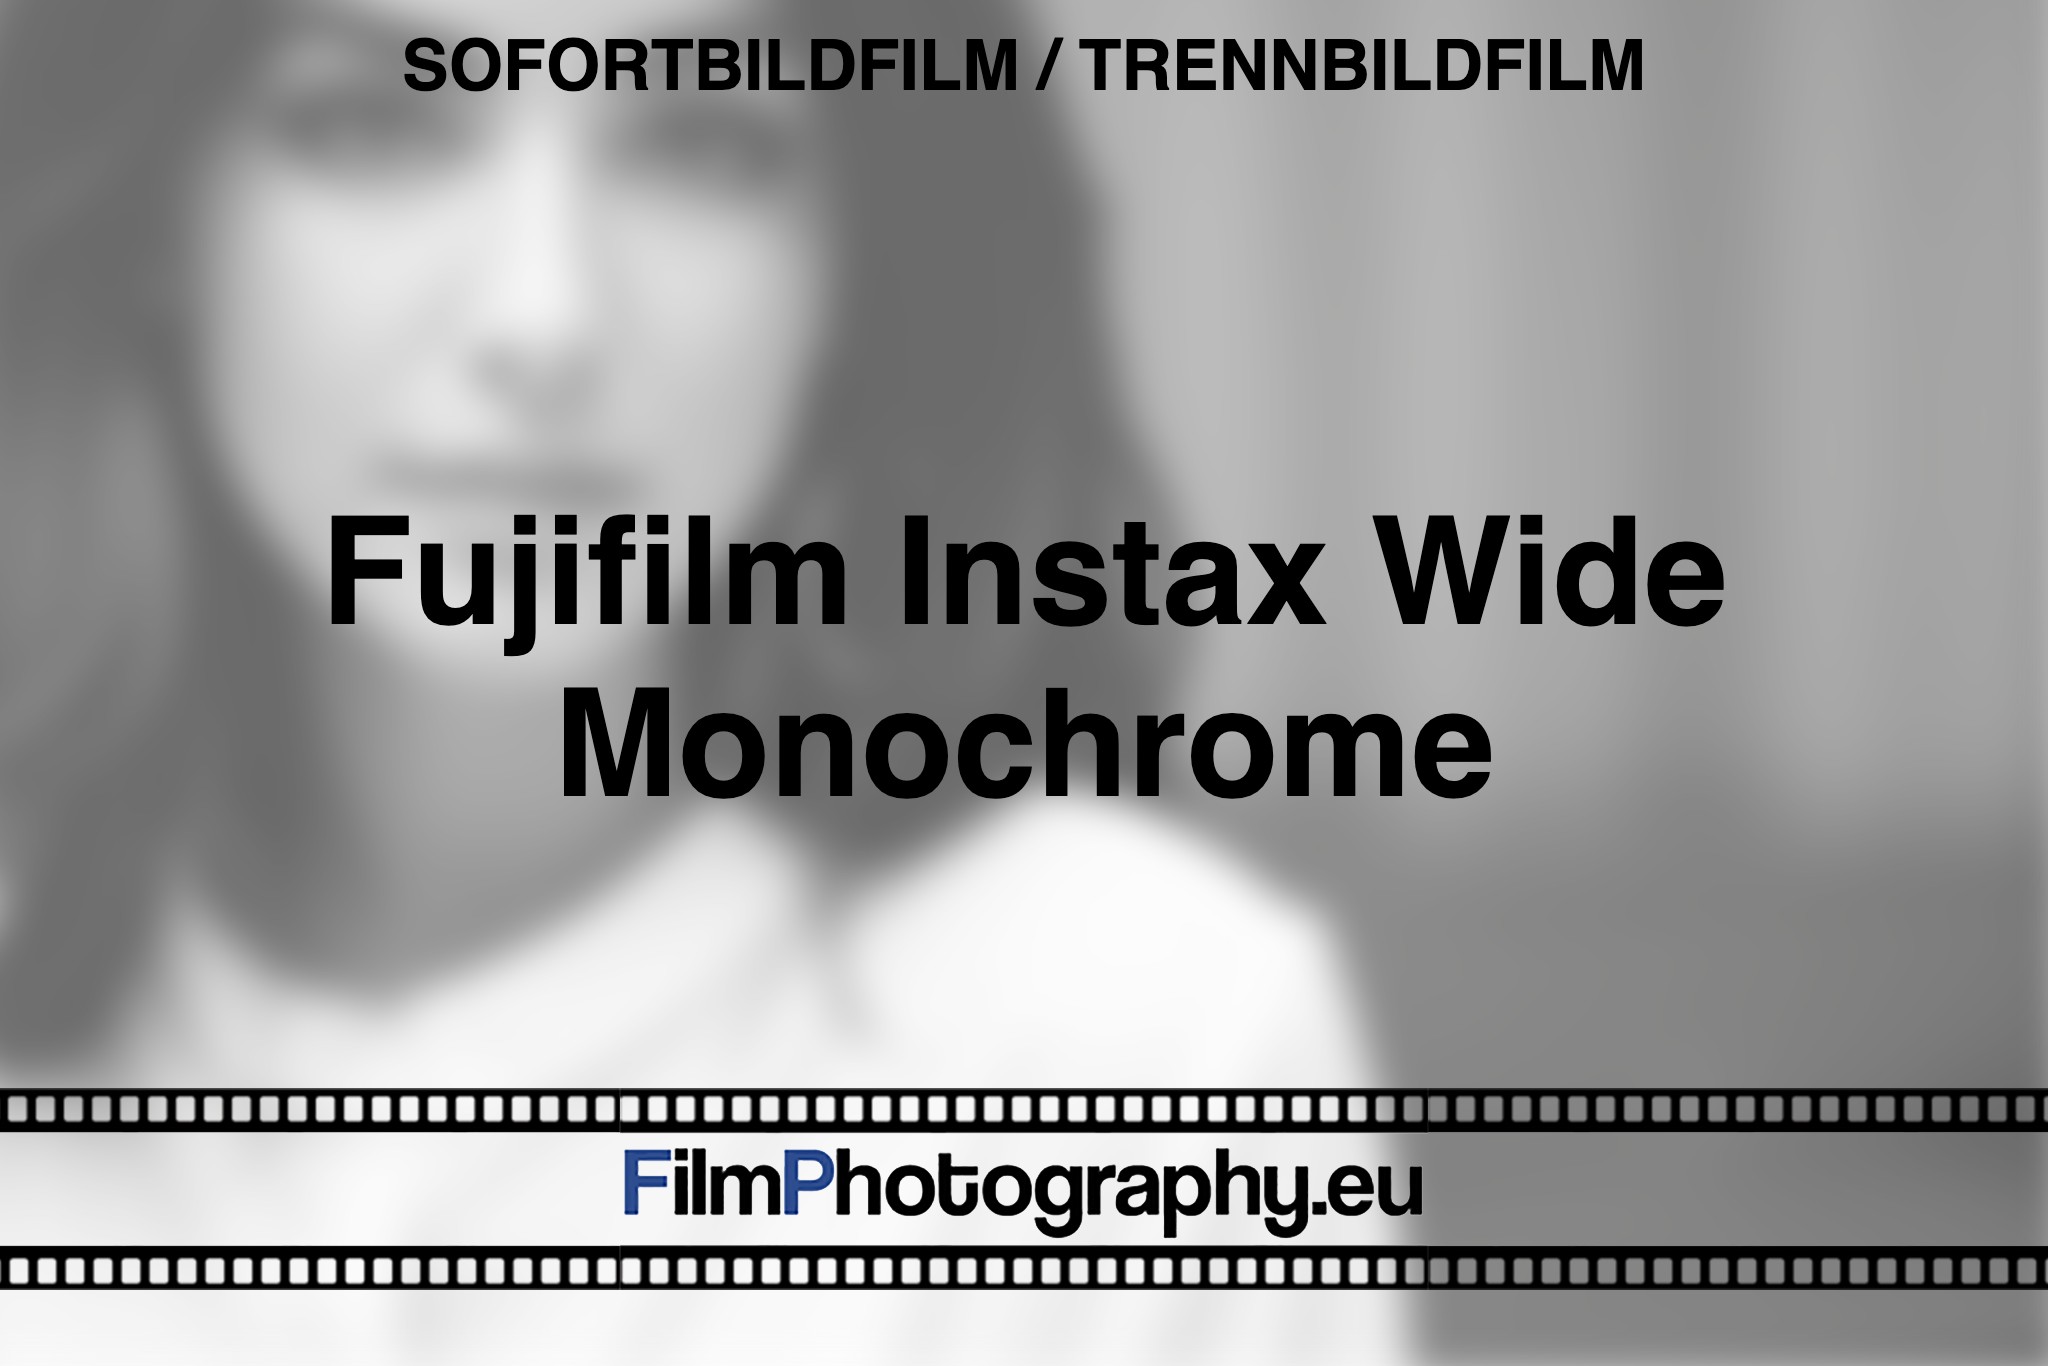 fujifilm-instax-wide-monochrome-sofortbildfilm-trennbildfilm-fp-bnv